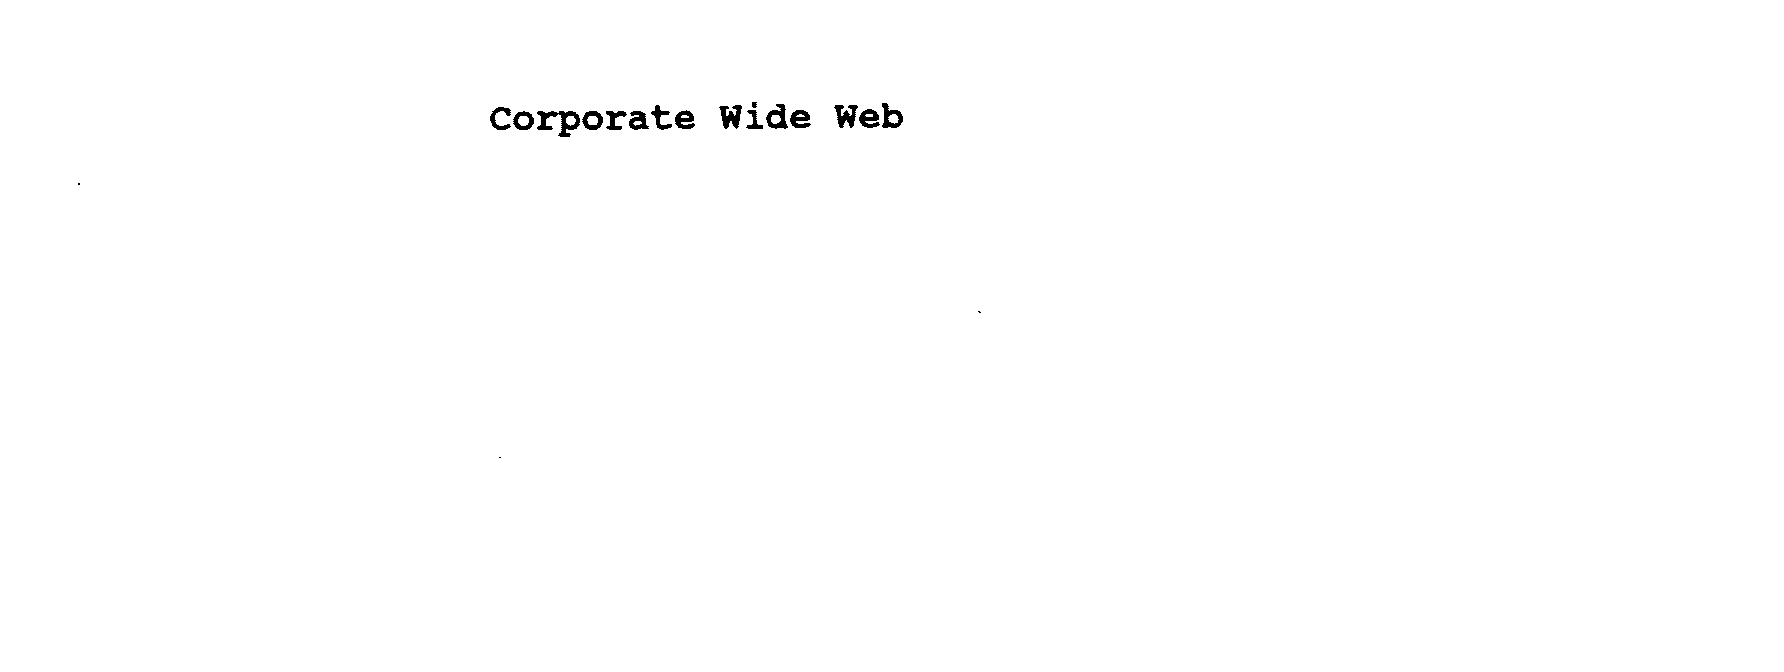  CORPORATE WIDE WEB